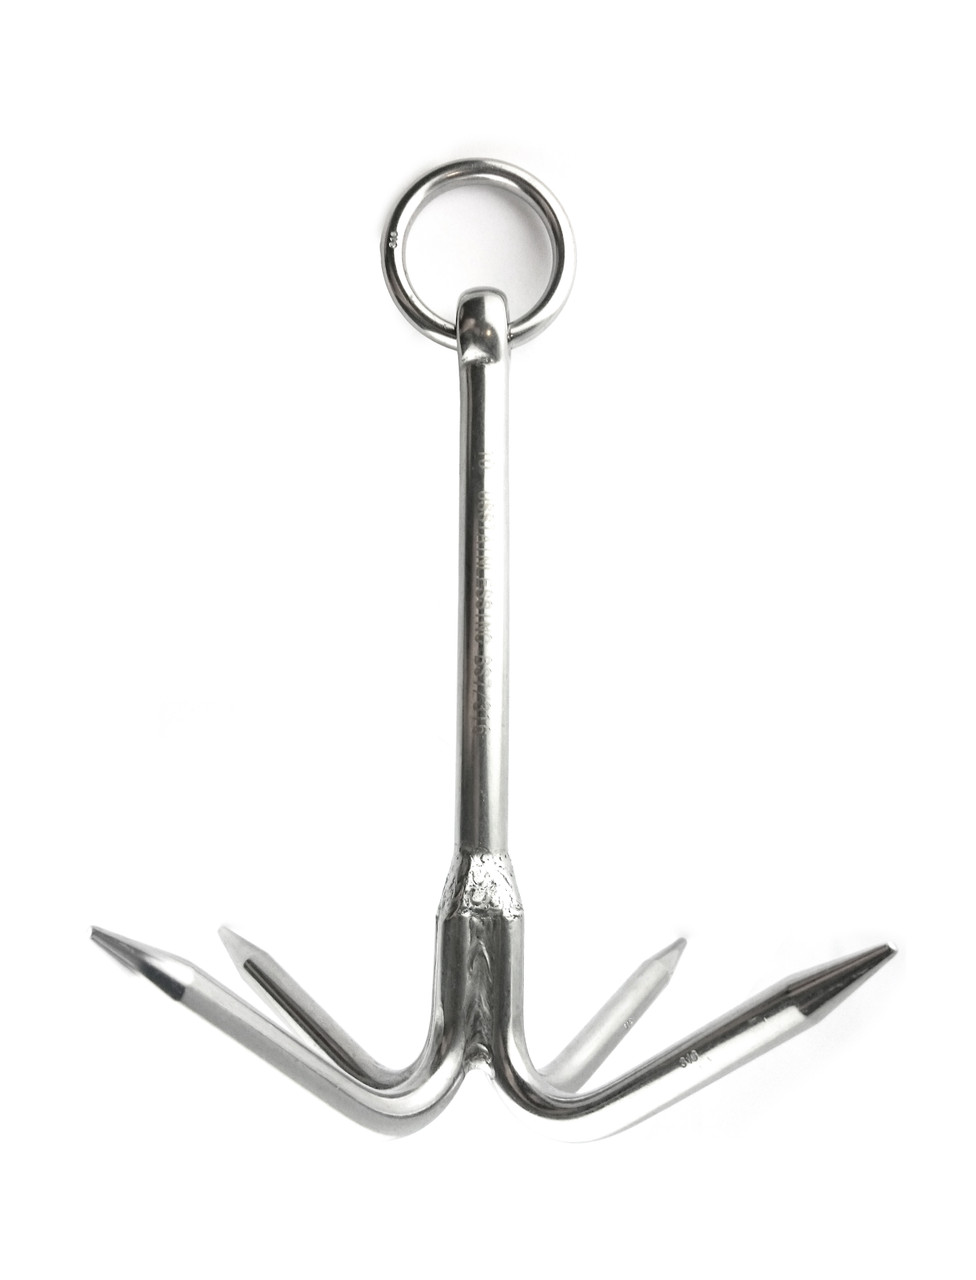 Stainless Steel 316 Hook Anchor 15 (375mm) Marine Grade Grapple